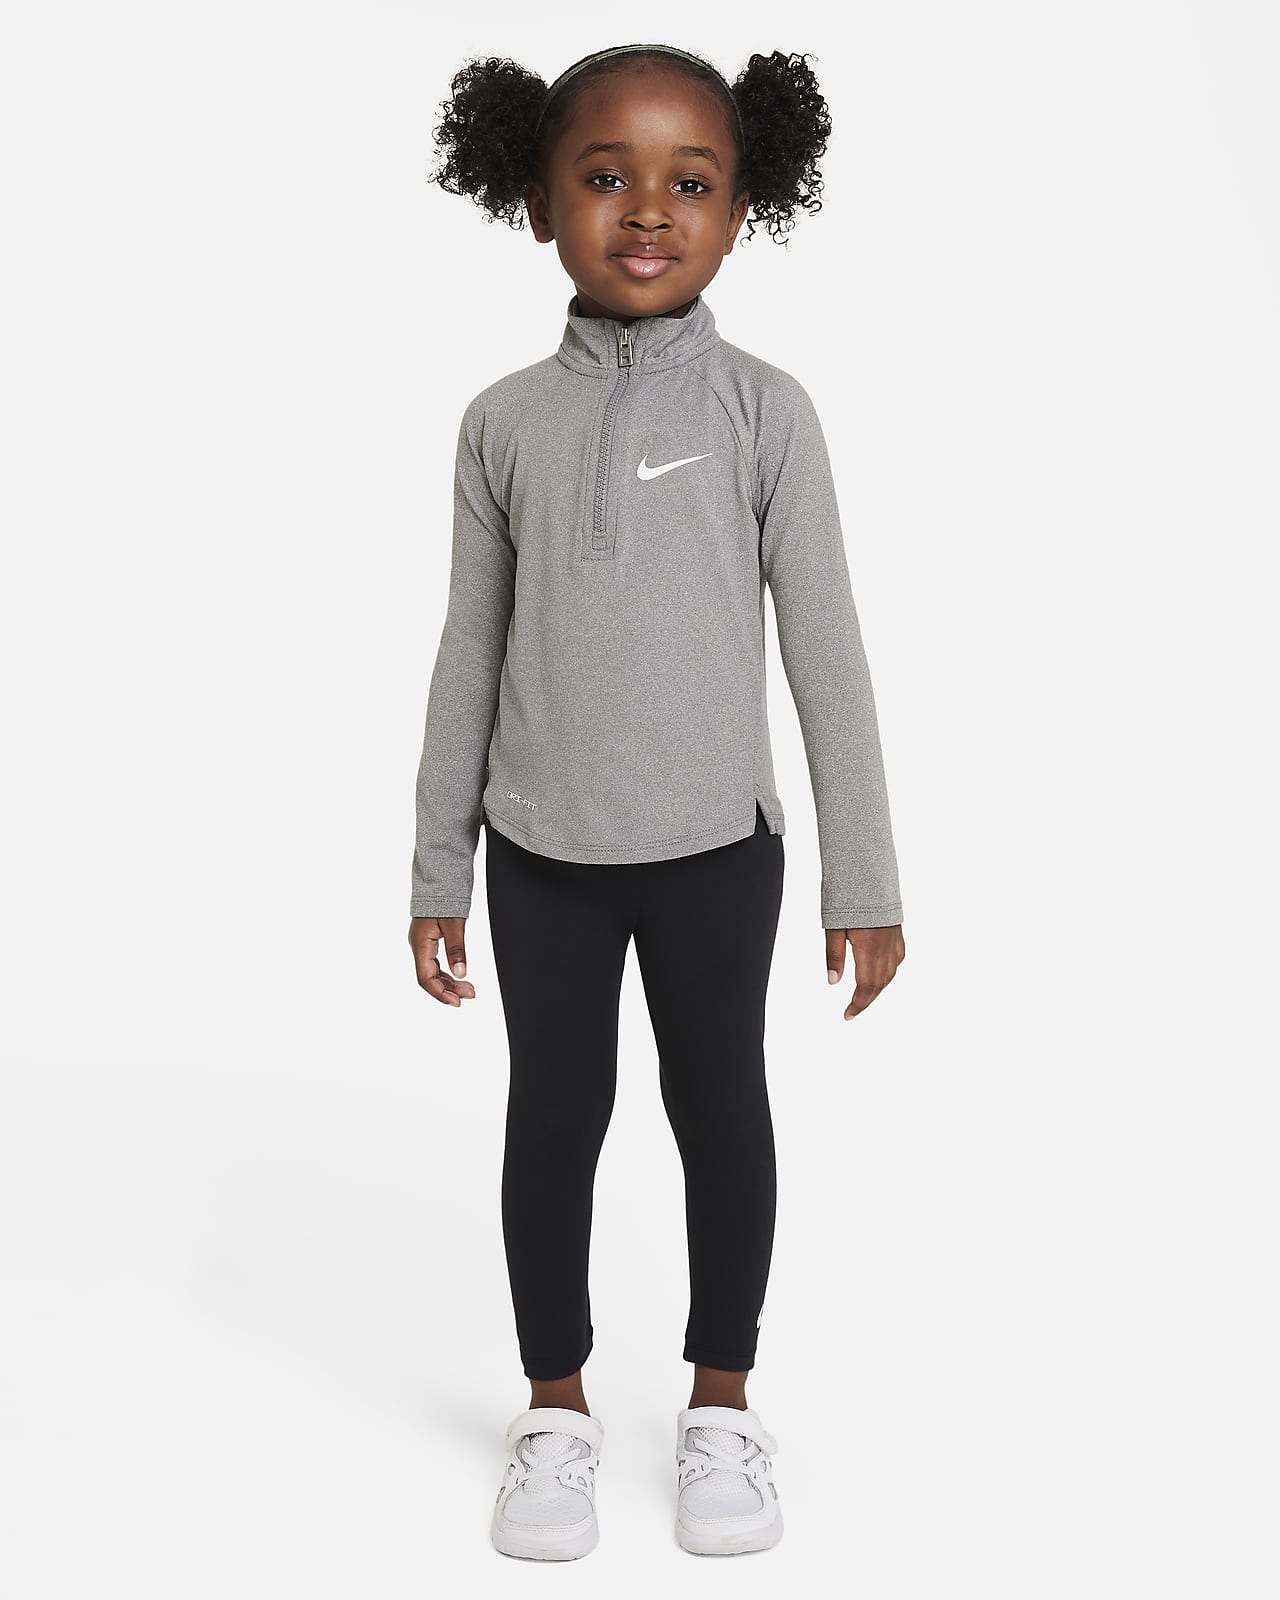 Nike Sci-Dye Dri-FIT Leggings Set Toddler 2-Piece Dri-FIT Set. Nike AT